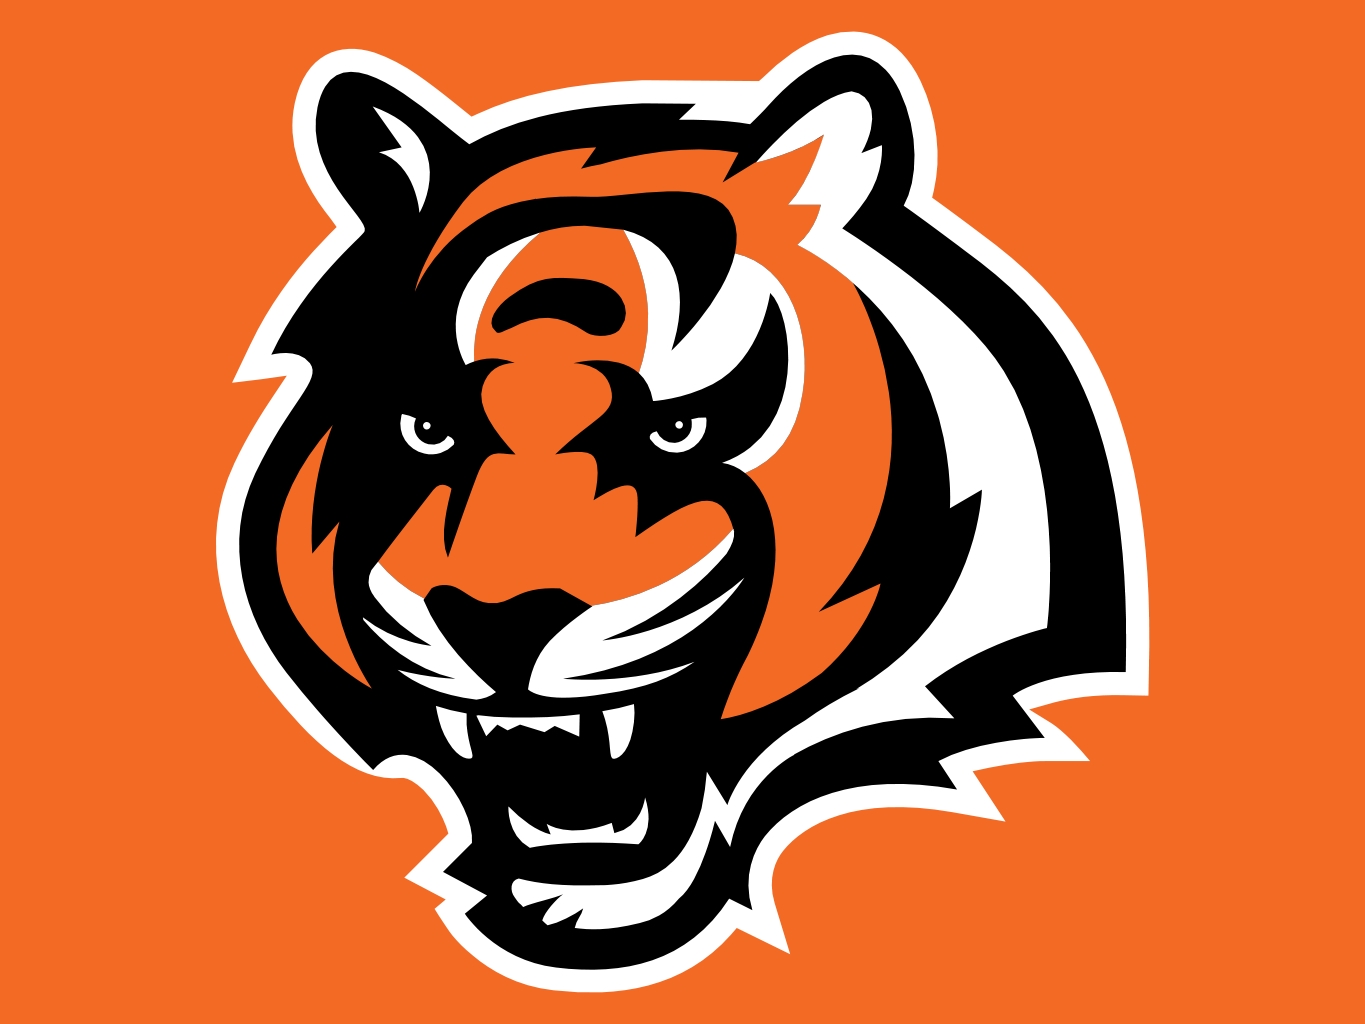     Bengals Logo By Imeimage Com Http Www Imeimage Com Cincinnati Bengals